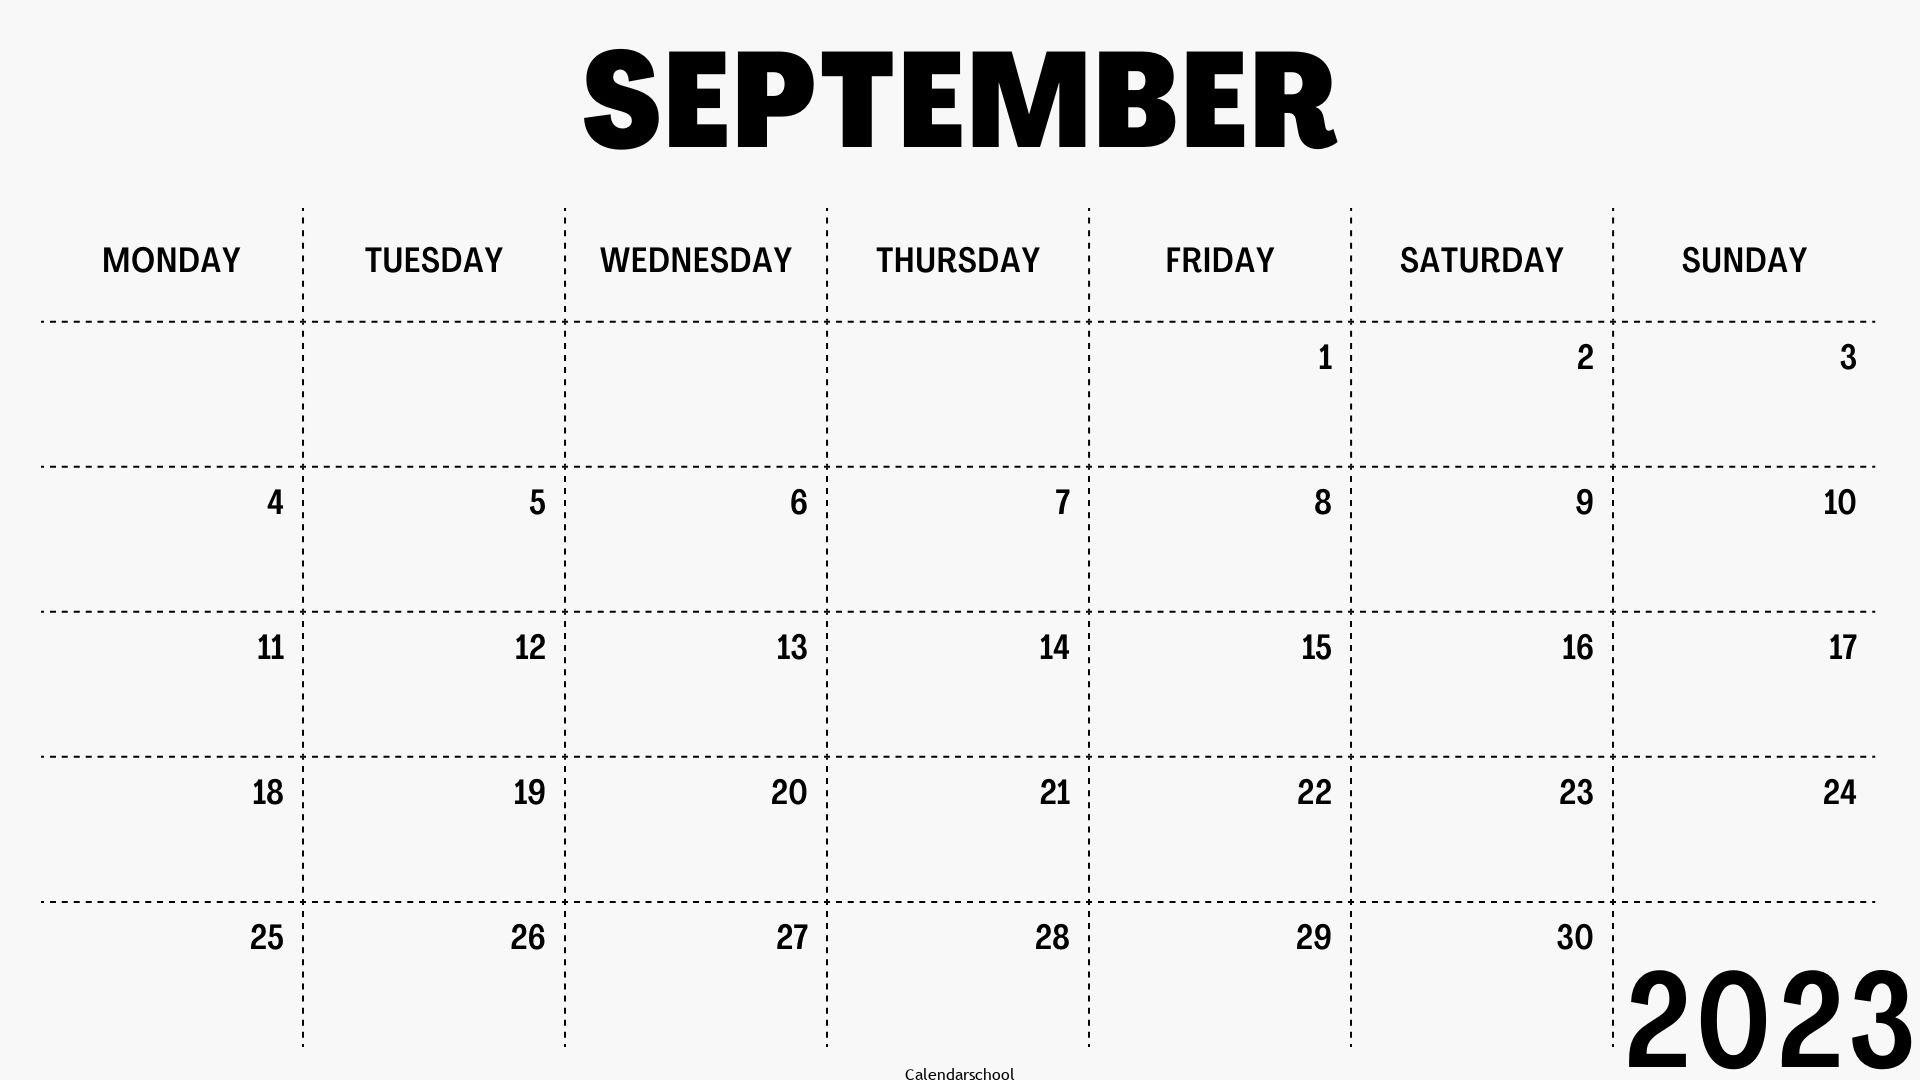 September Calendar 2023 Printable